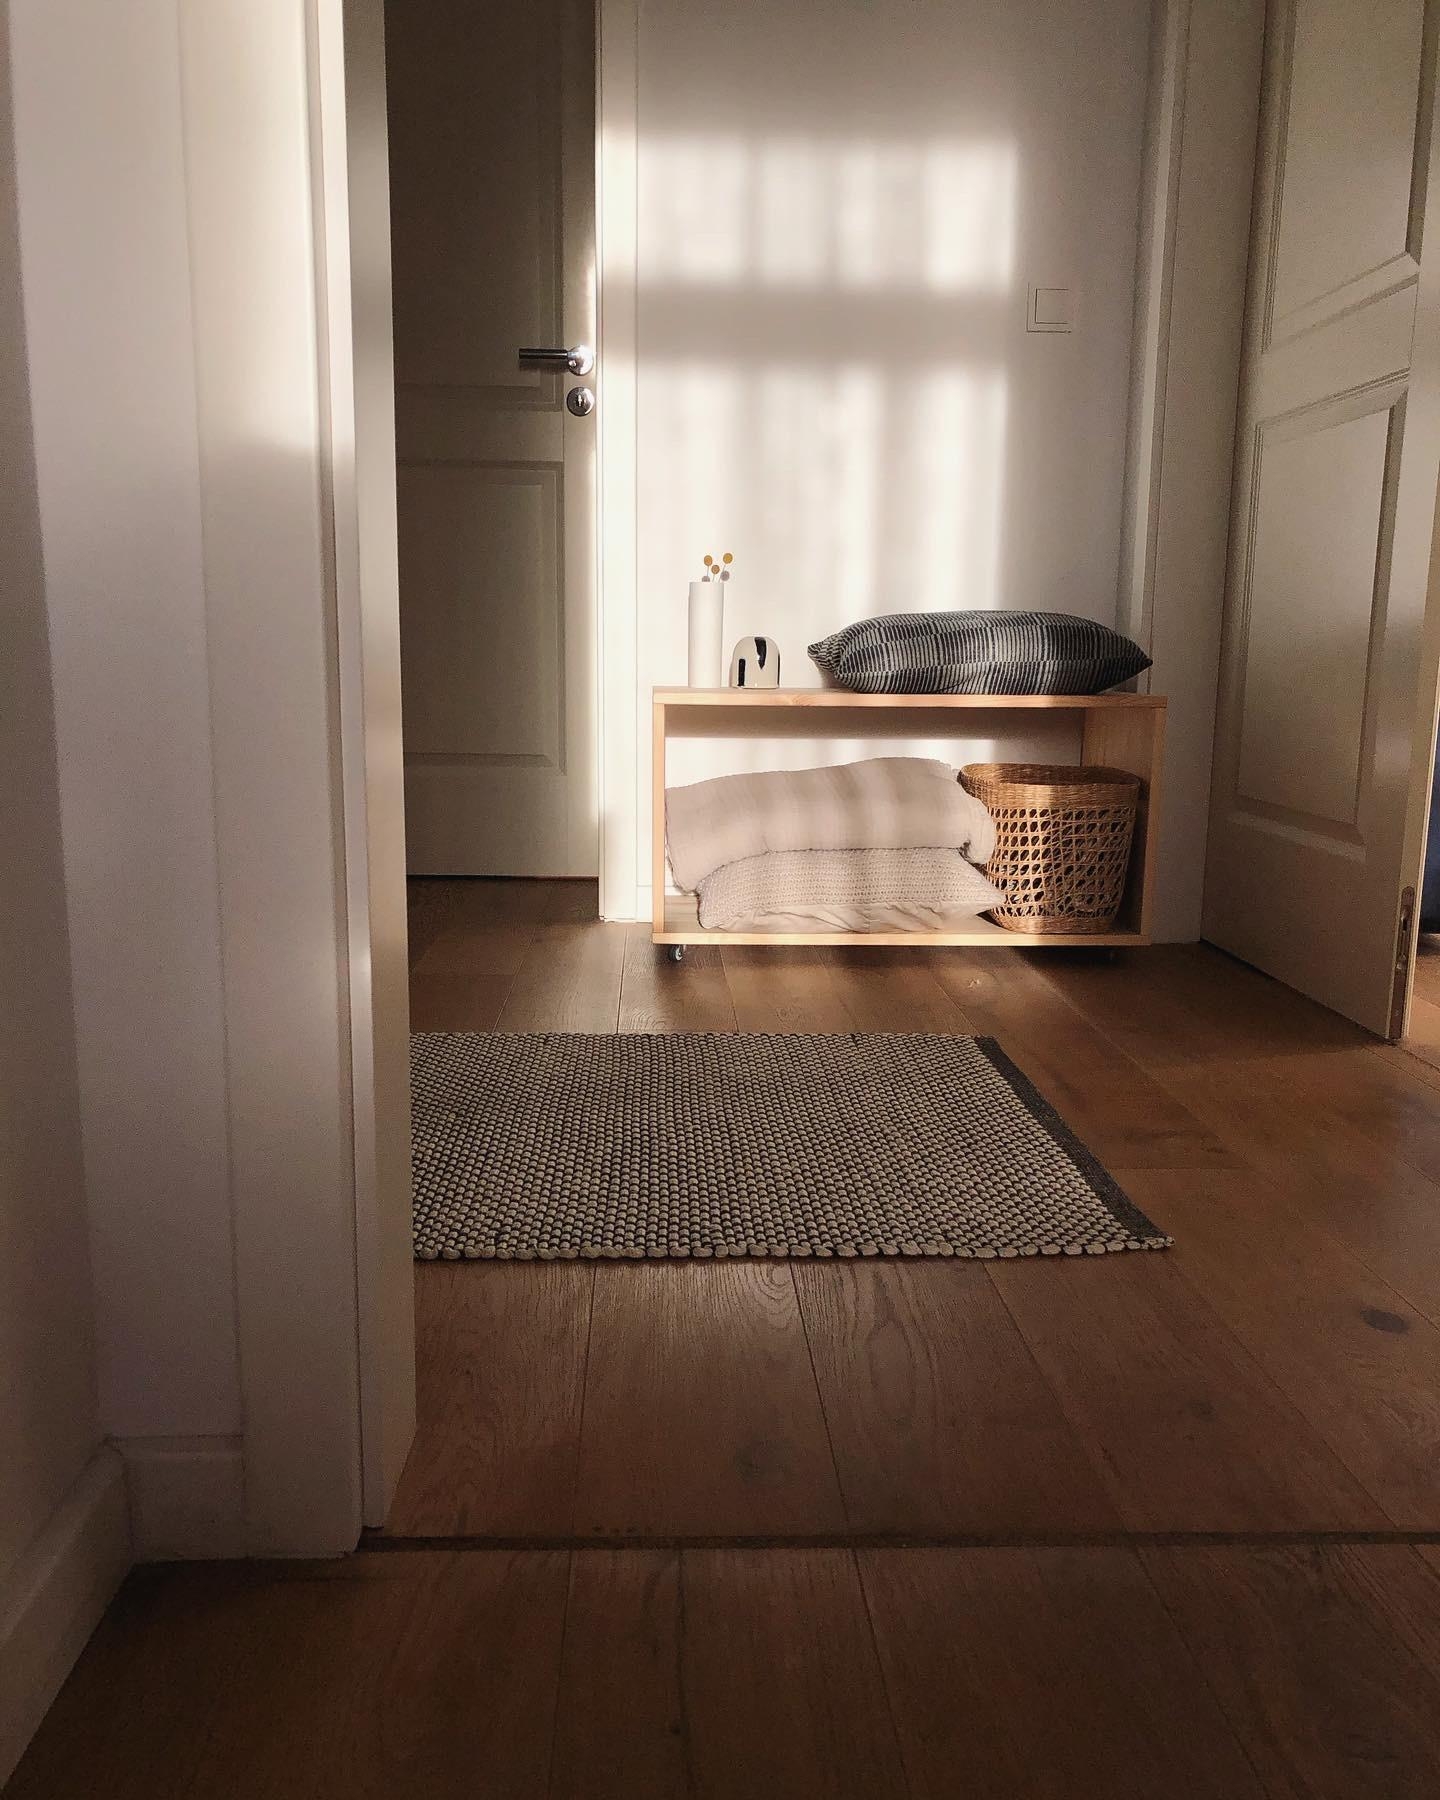 #morninglight ✨ 
#flur #eingangsbereich #DIY #home #homedecor #interior #nordicstyle #nordichome #scandi #couchstyle